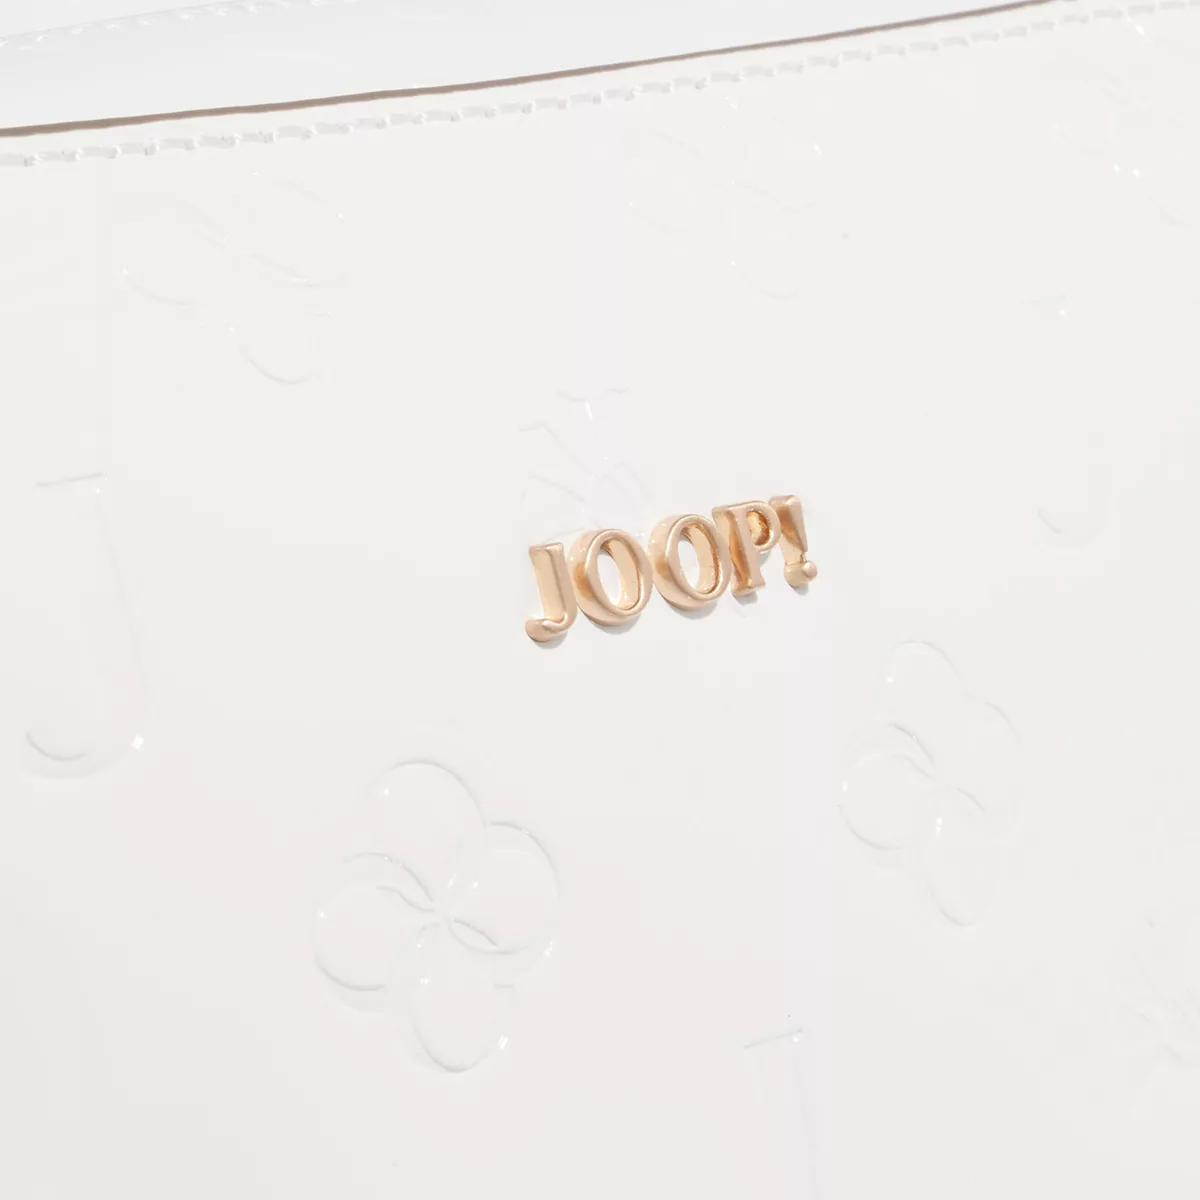 Joop! Crossbody bags Decoro Lucente Cloe Shoulderbag Shz in wit